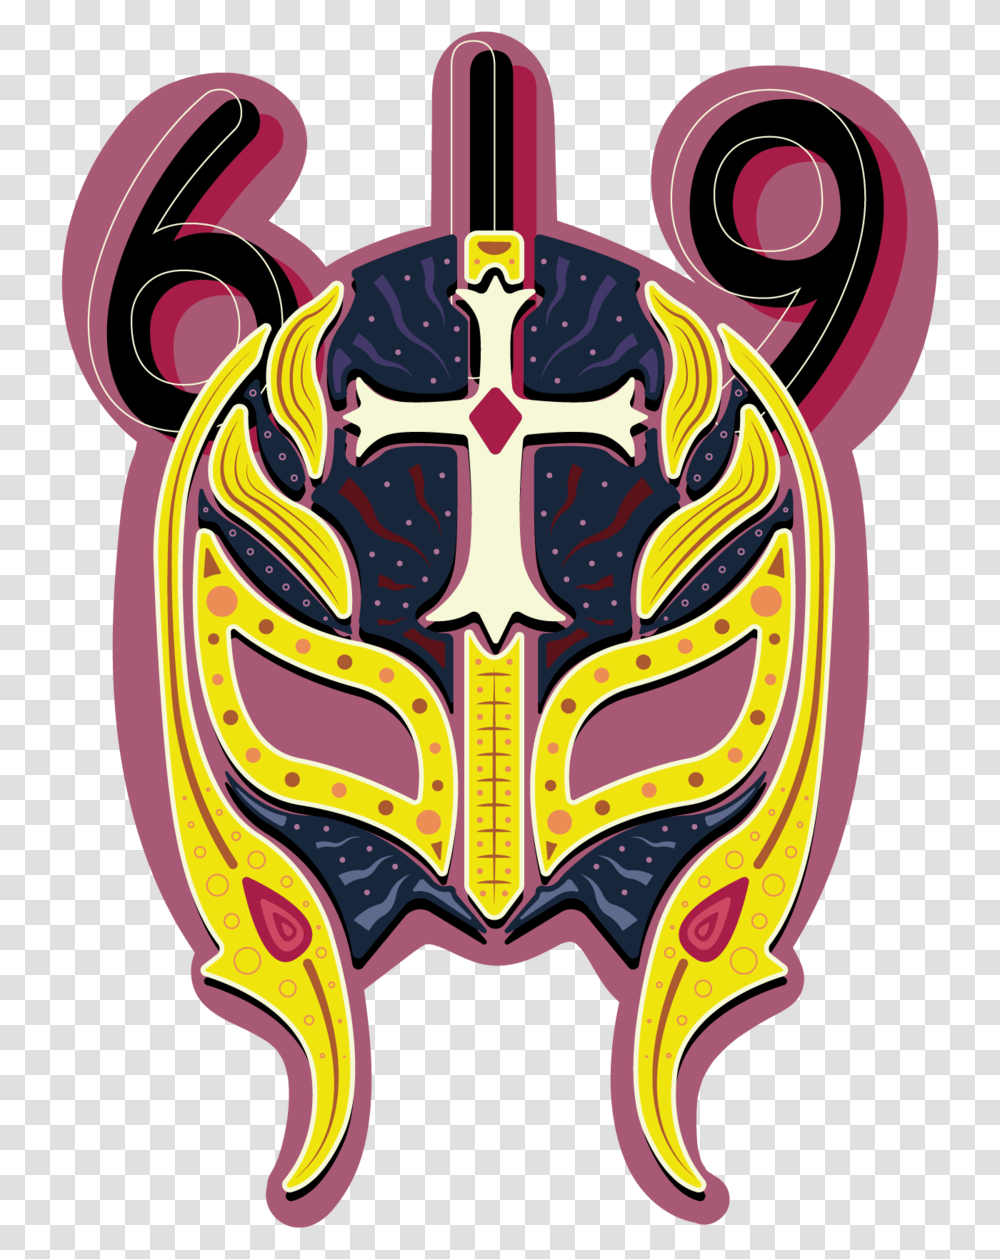 Rey Mysterio Mask Illustration, Emblem, Weapon, Weaponry Transparent Png